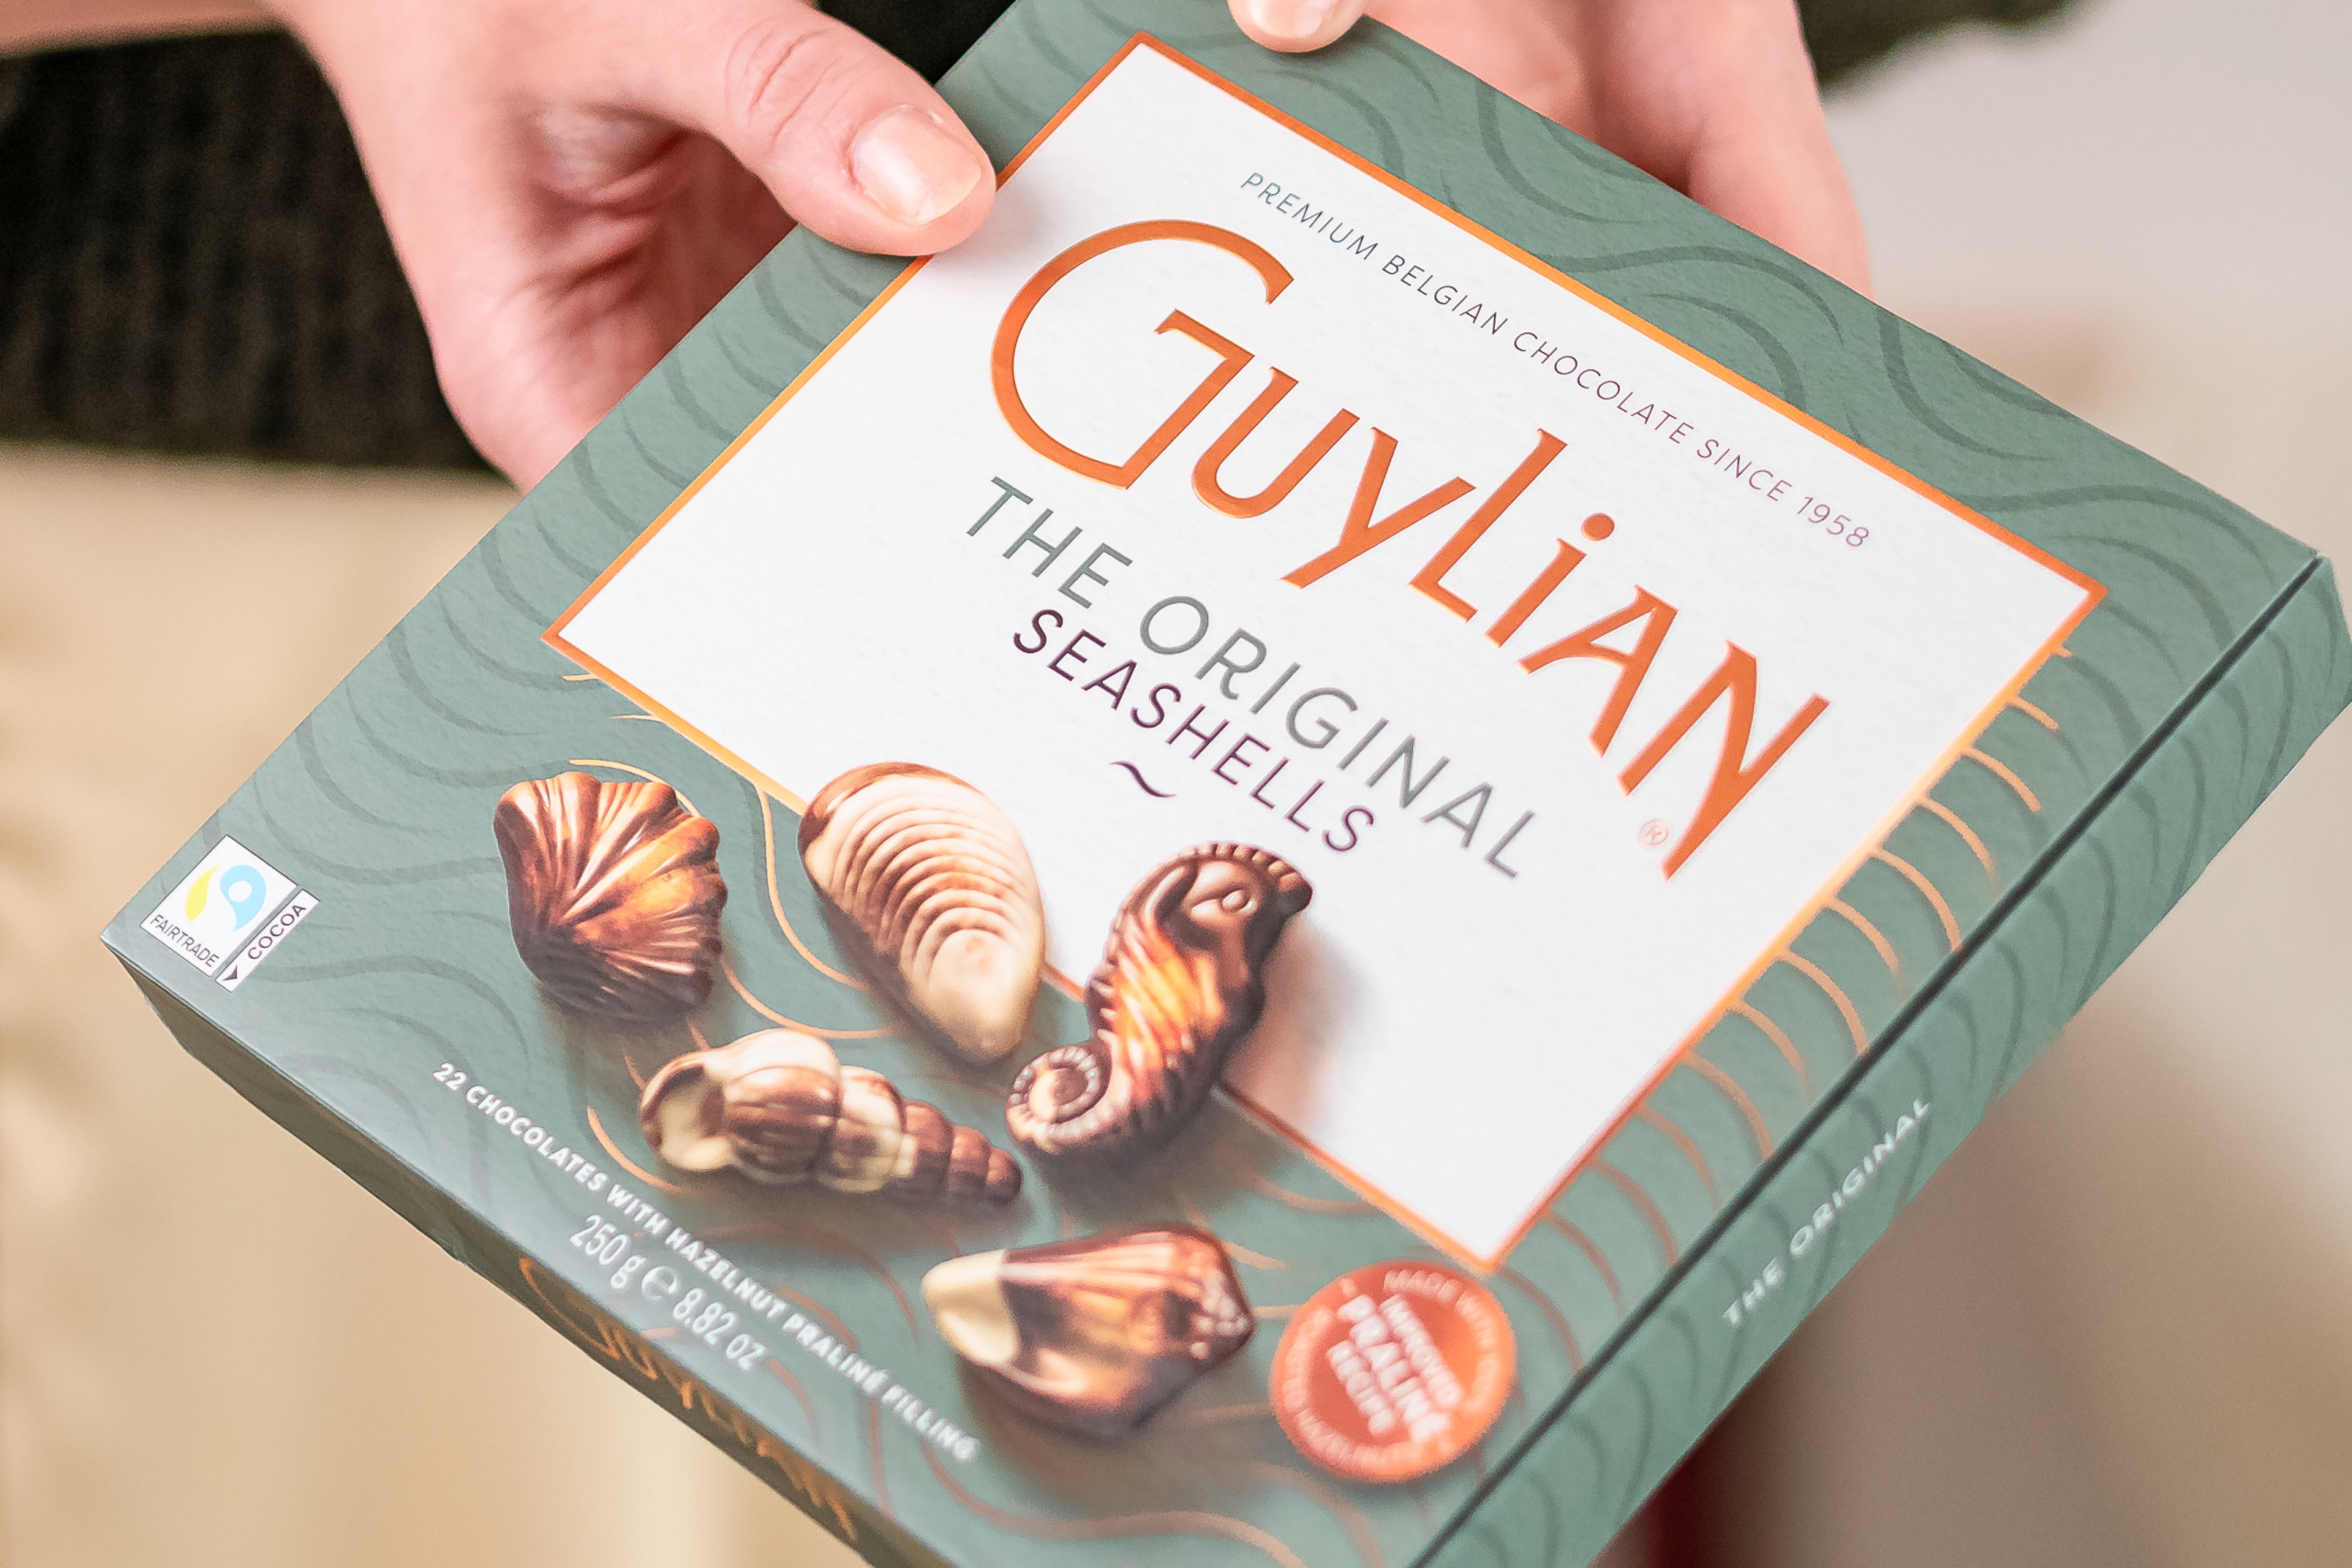 Guylian - Premium Belgische chocolade sinds 1958